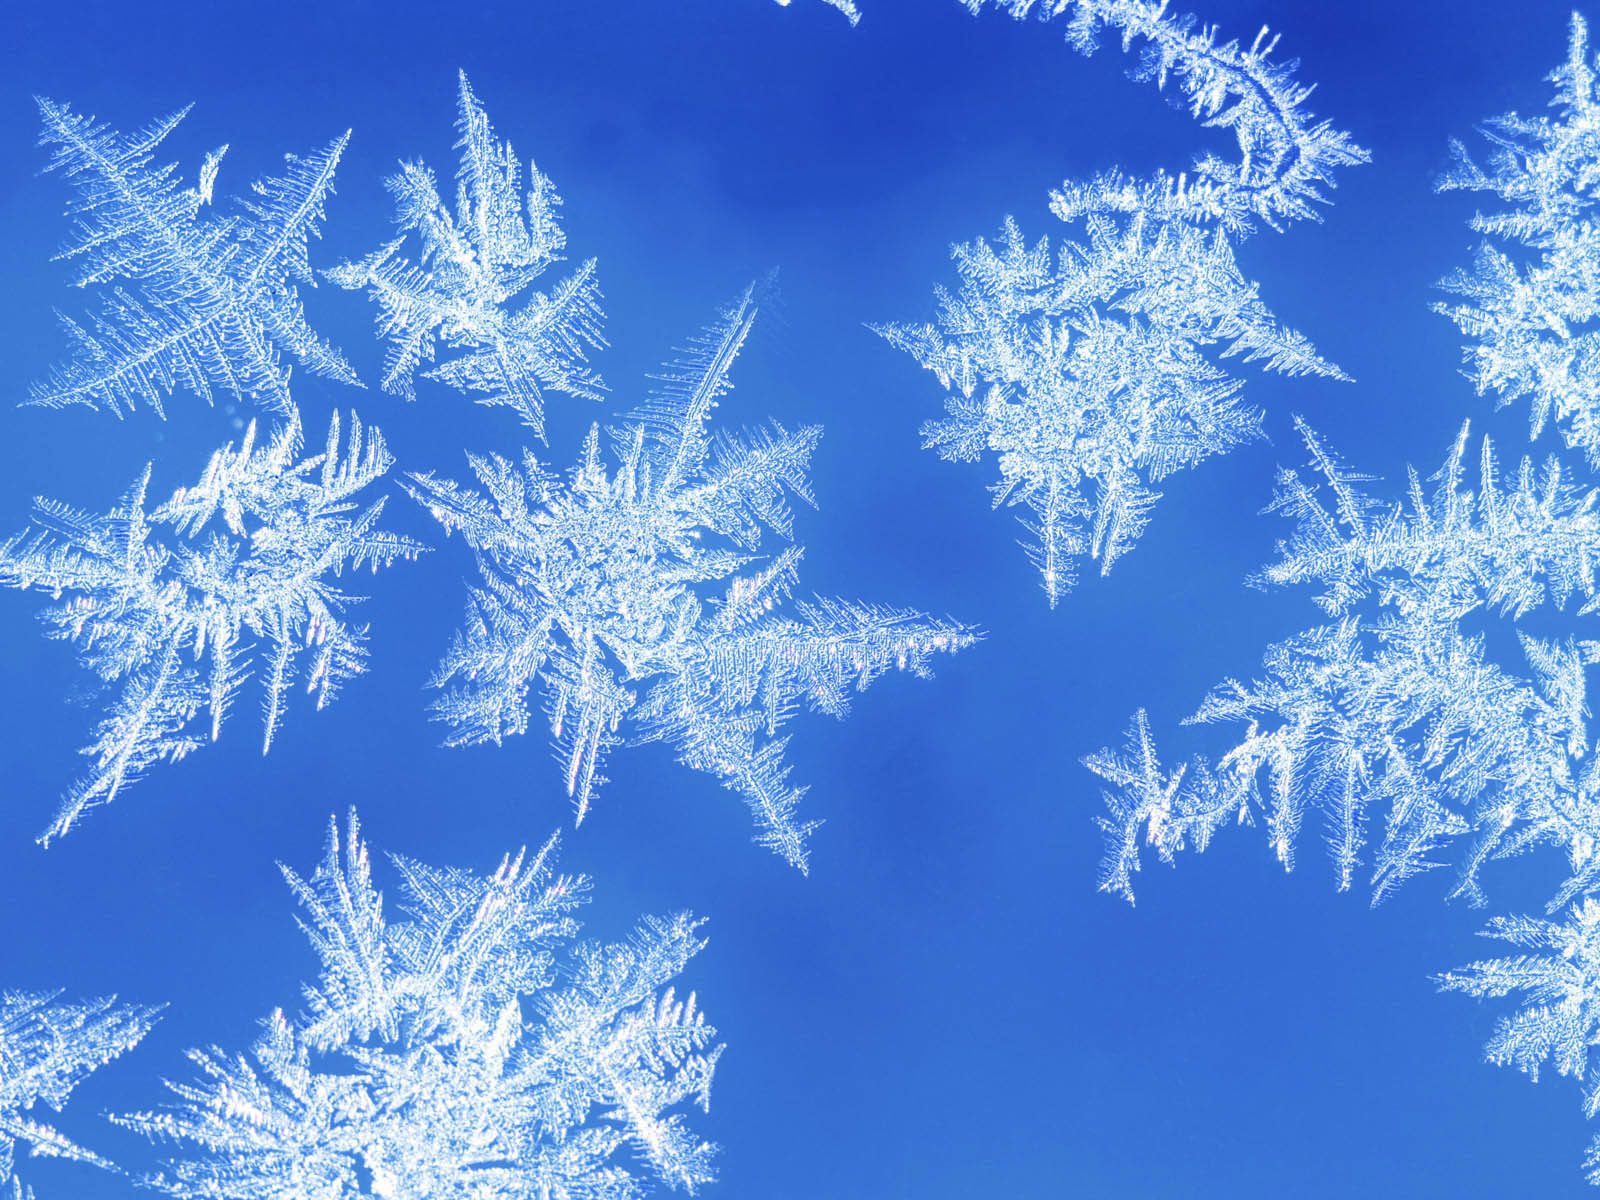 snowflake wallpaper hd,frost,freezing,winter,snowflake,sky